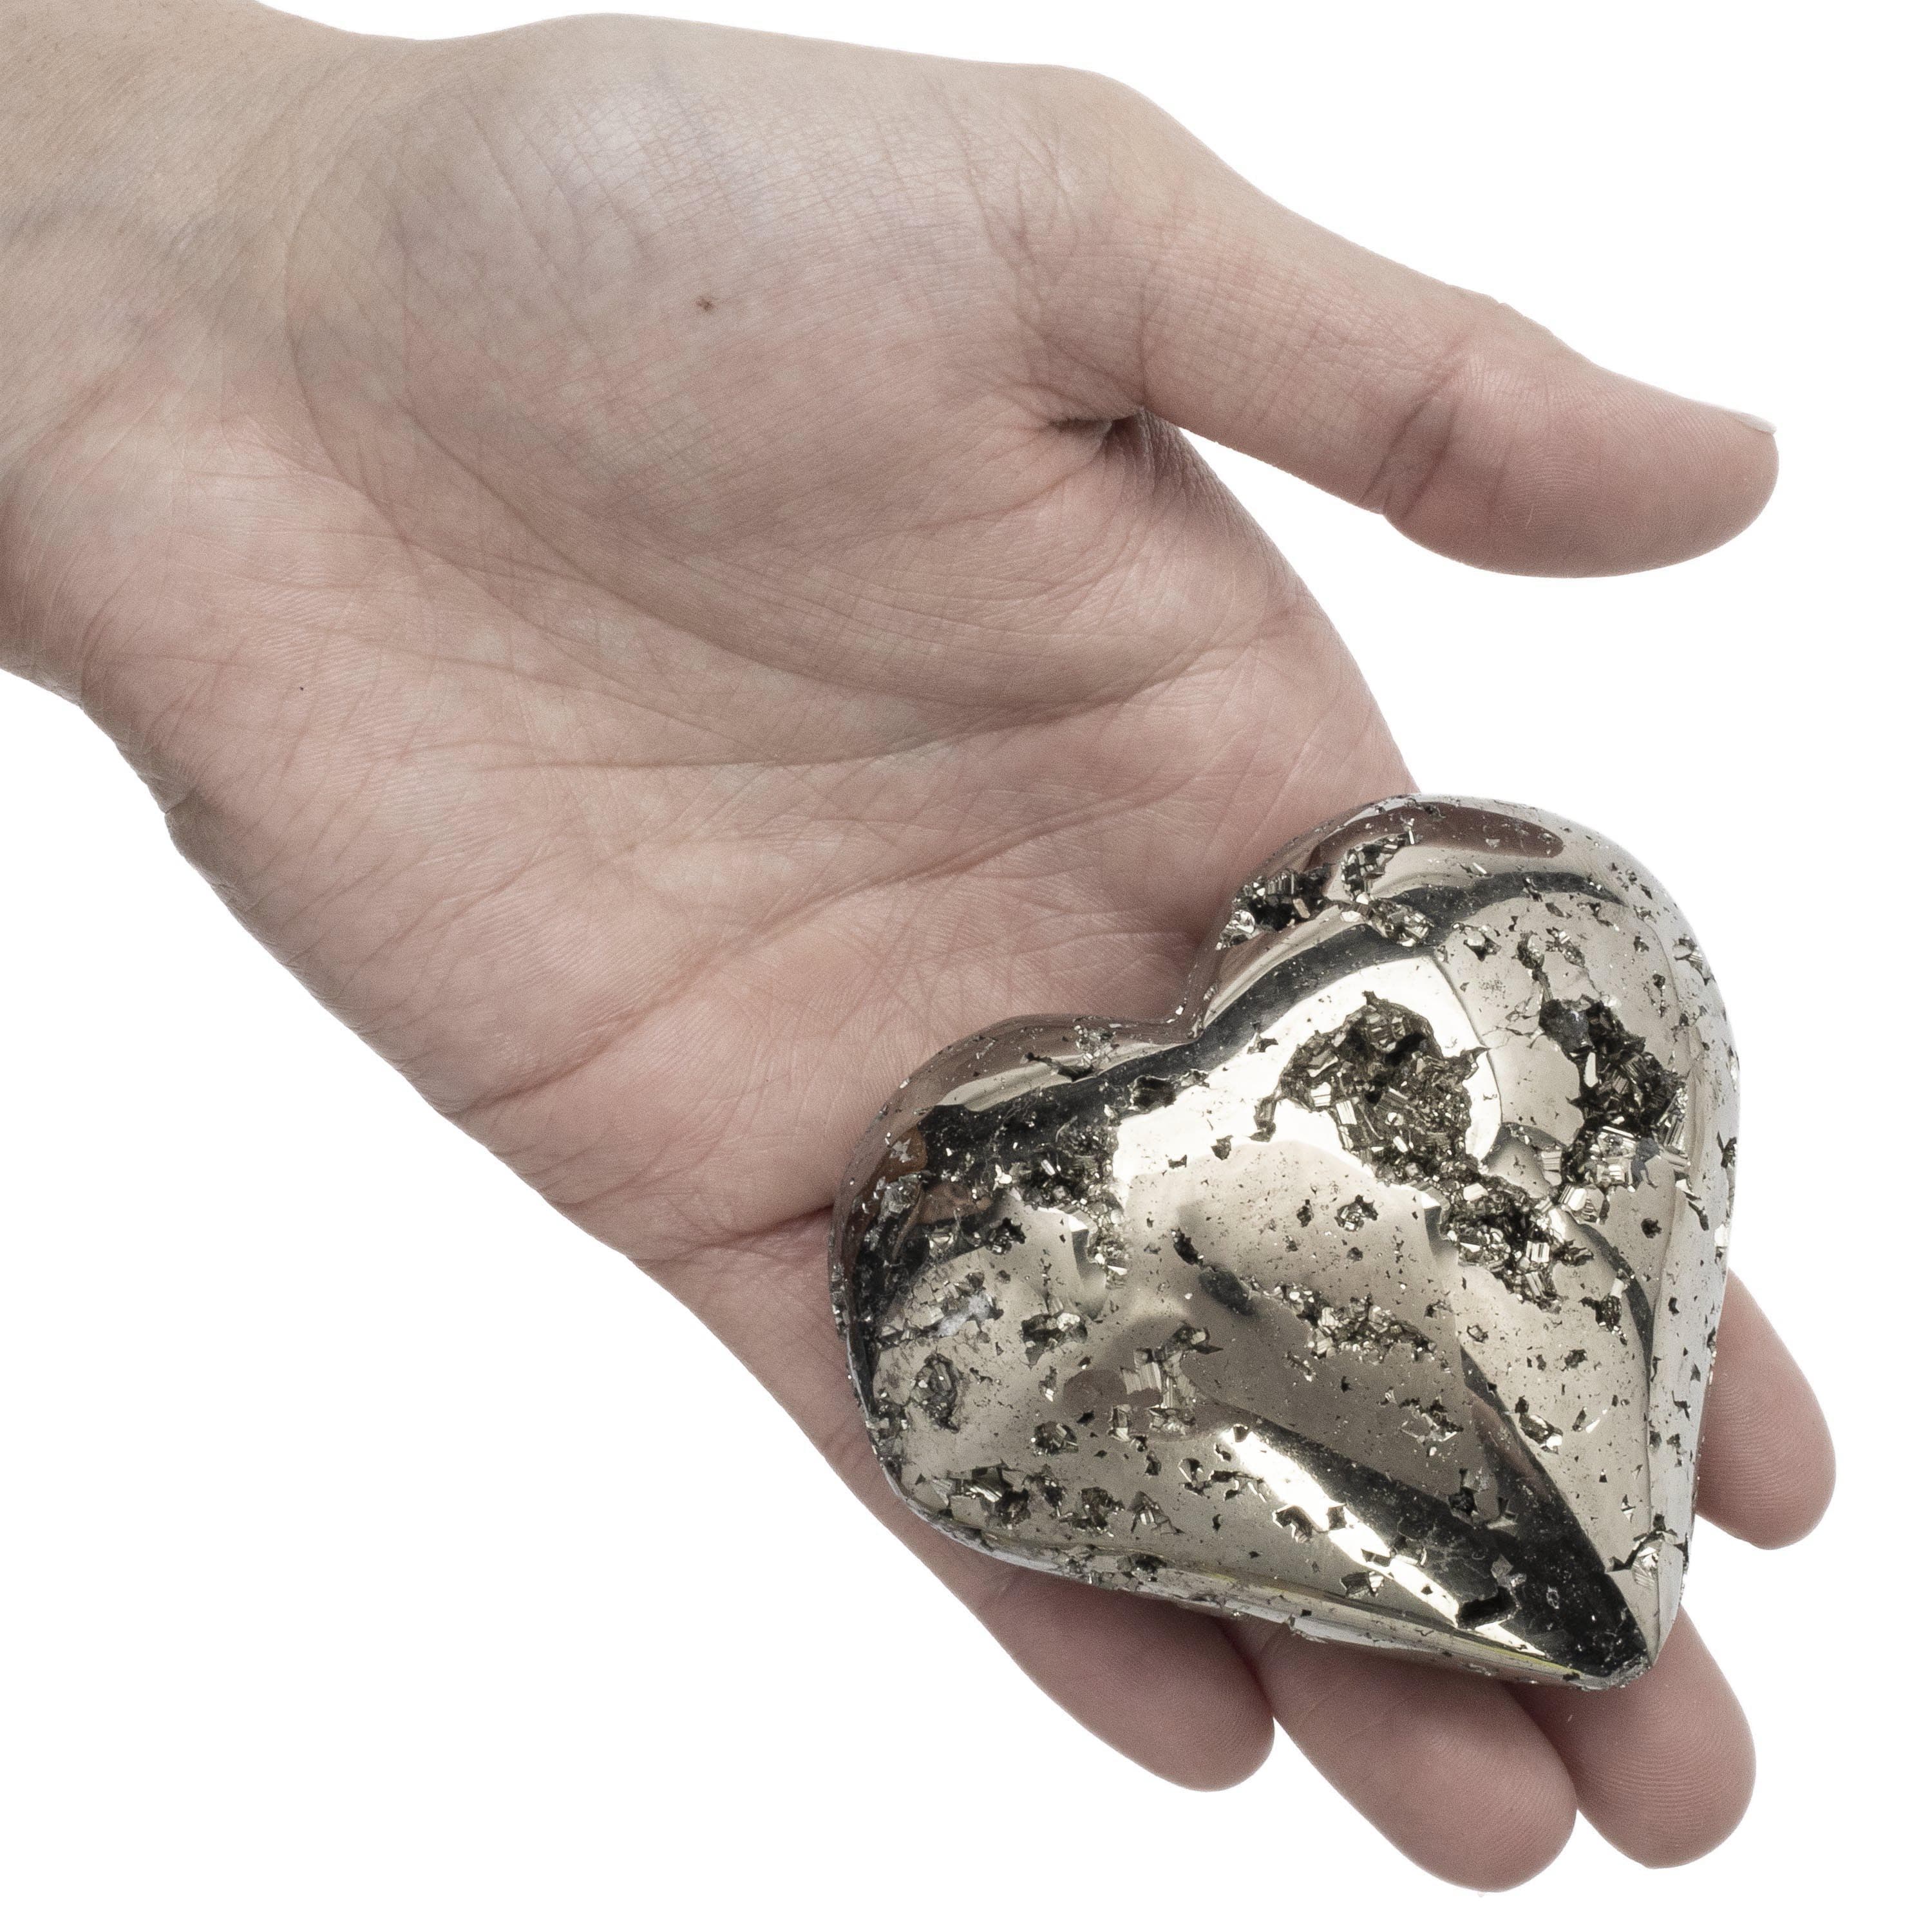 Kalifano Pyrite Pyrite Heart Carving 350 grams GH400-PC